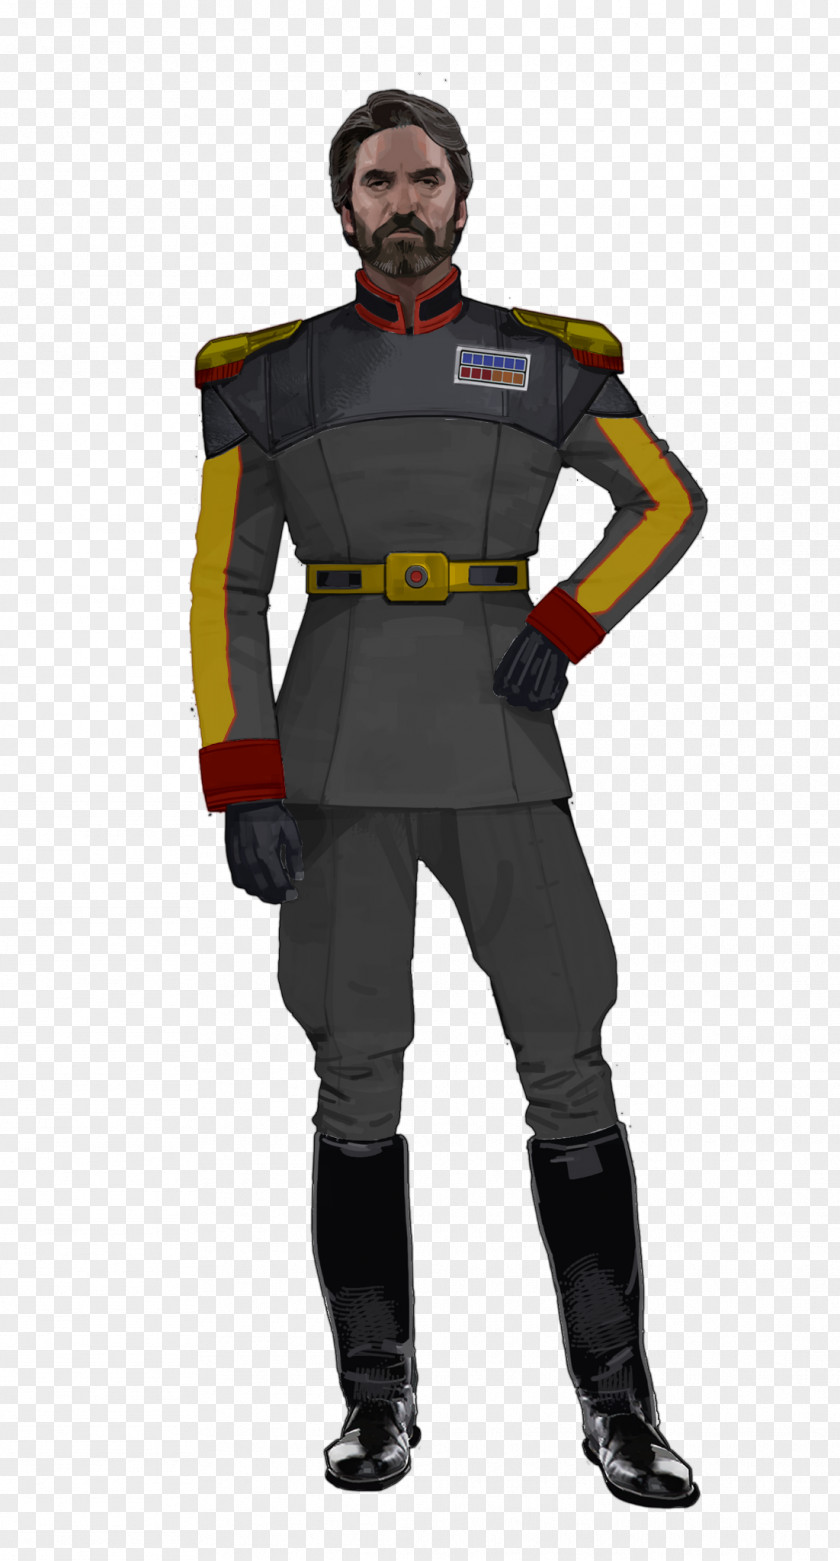 Navy Uniform Star Wars Roleplaying Game Stormtrooper Wookieepedia Costume PNG